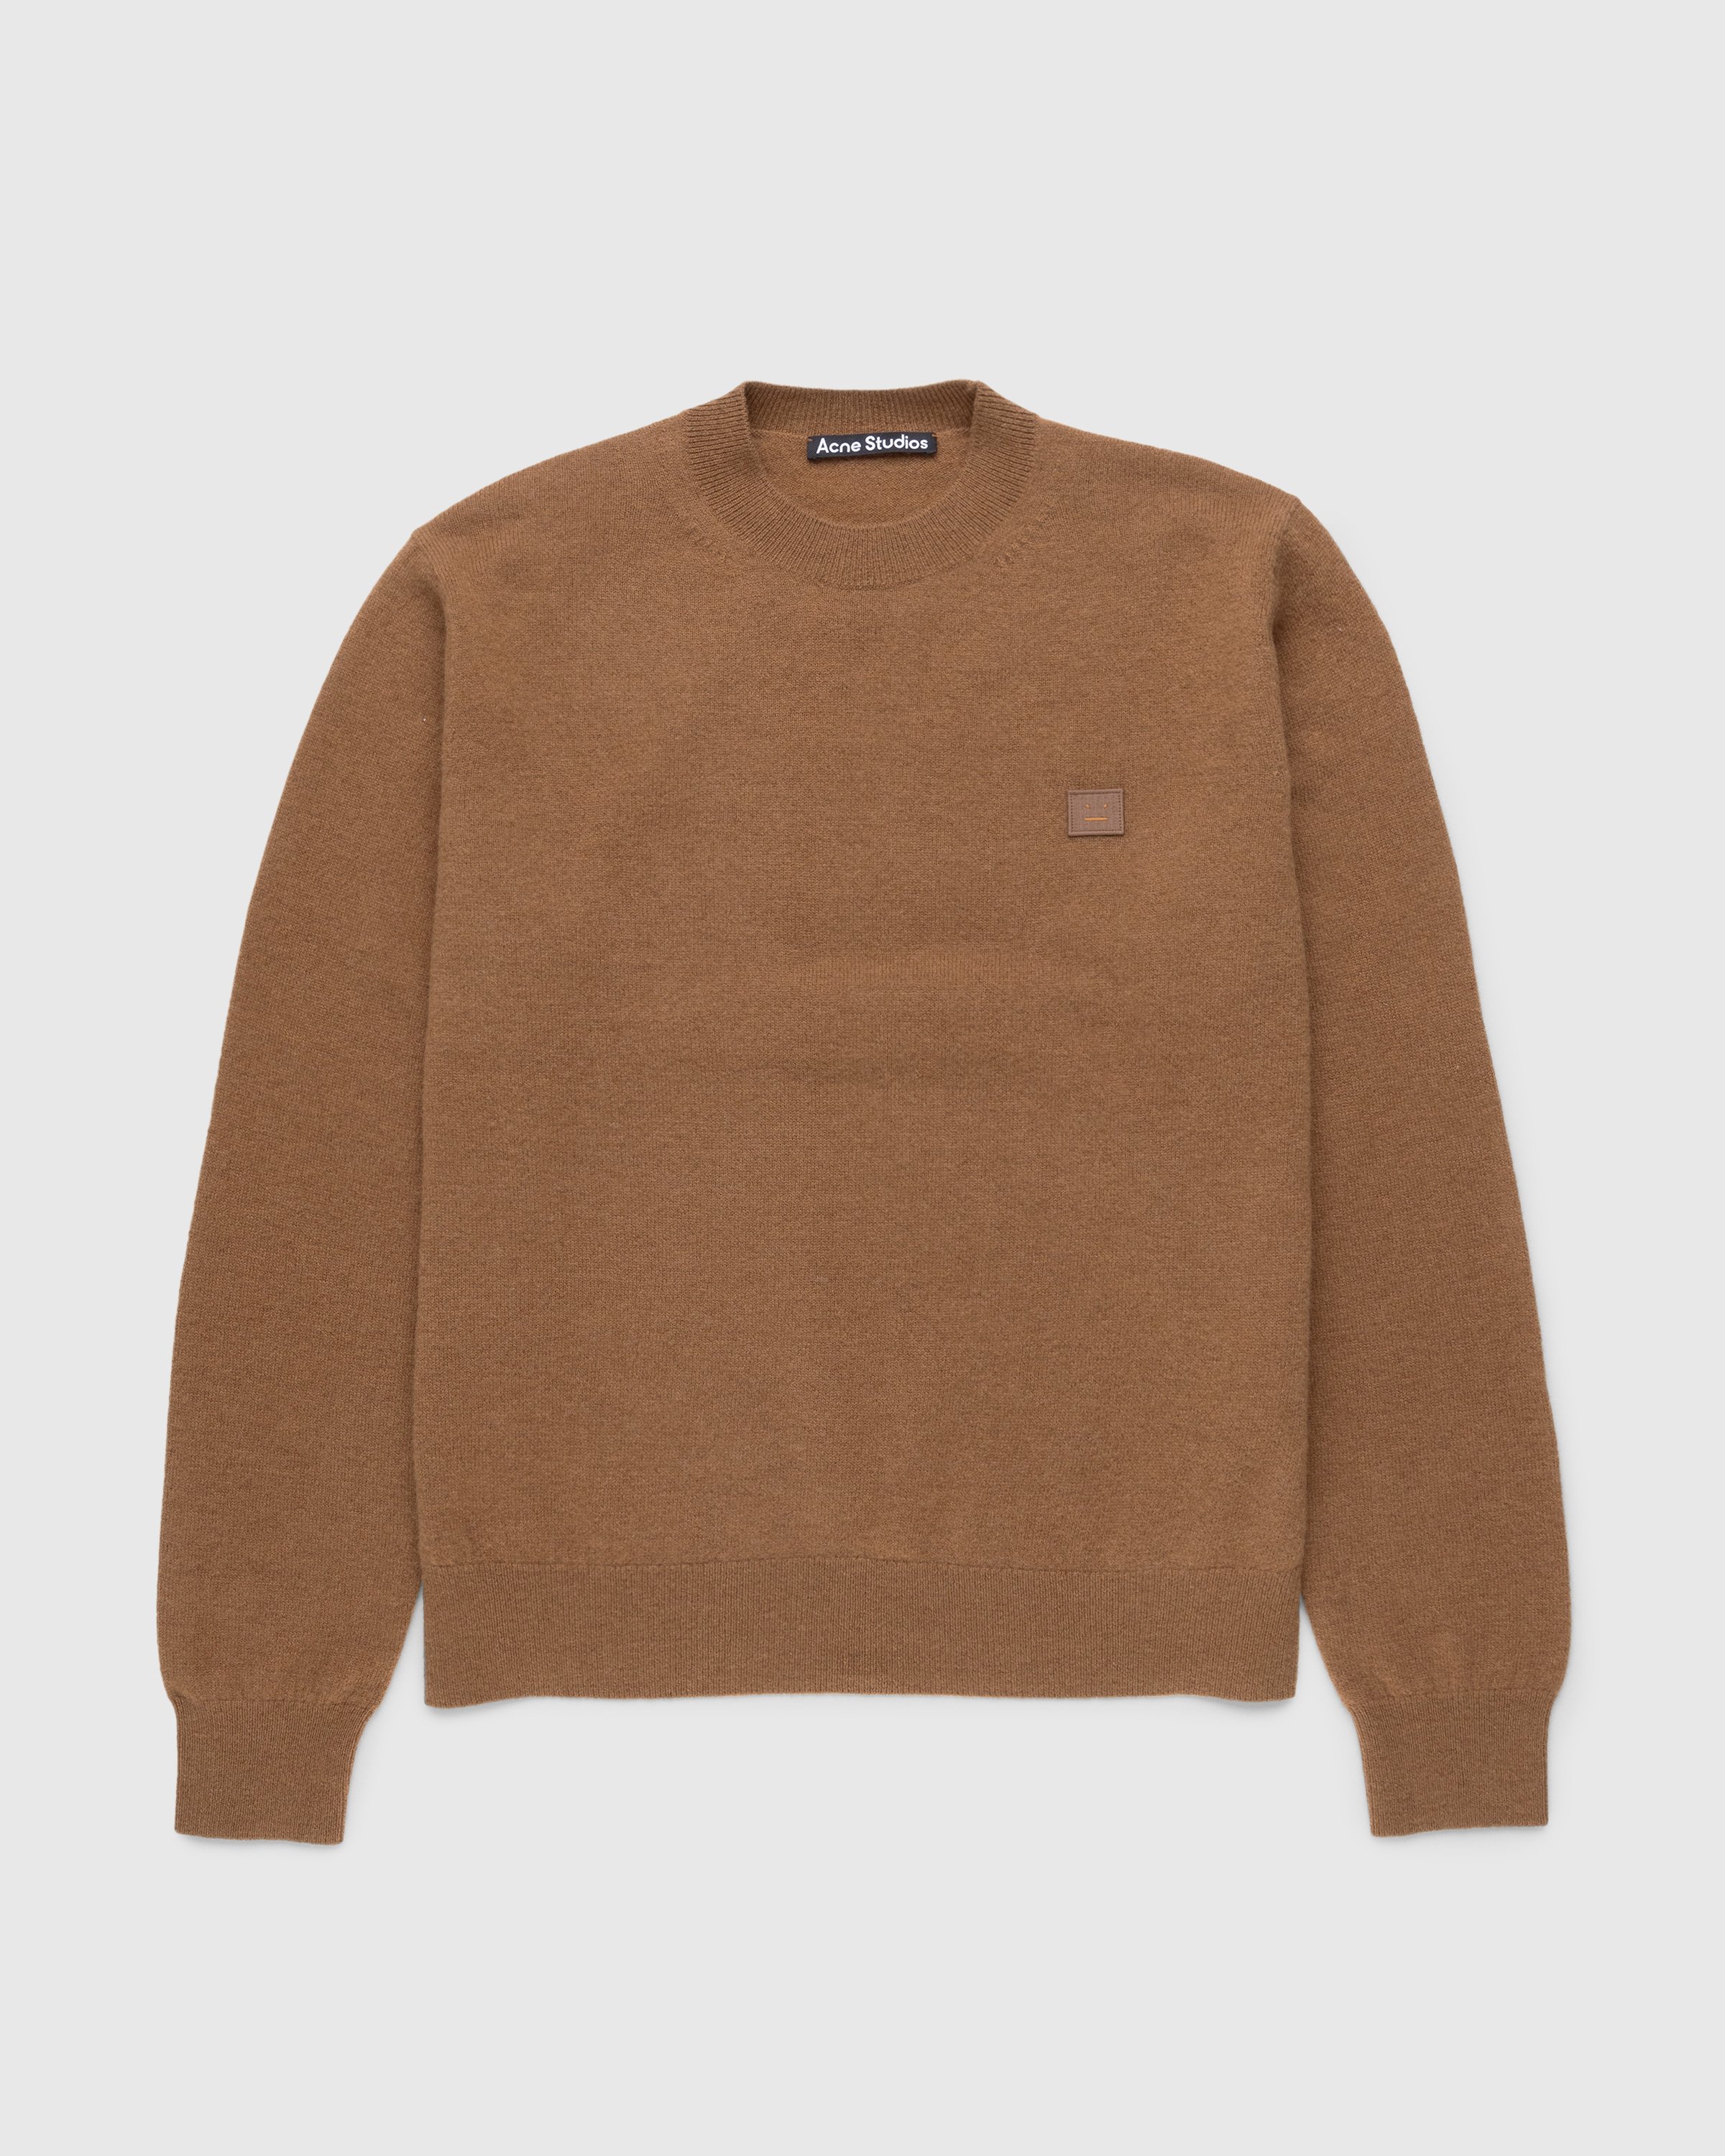 Acne Studios - Wool Crewneck Sweater Toffee Brown - Clothing - Brown - Image 1